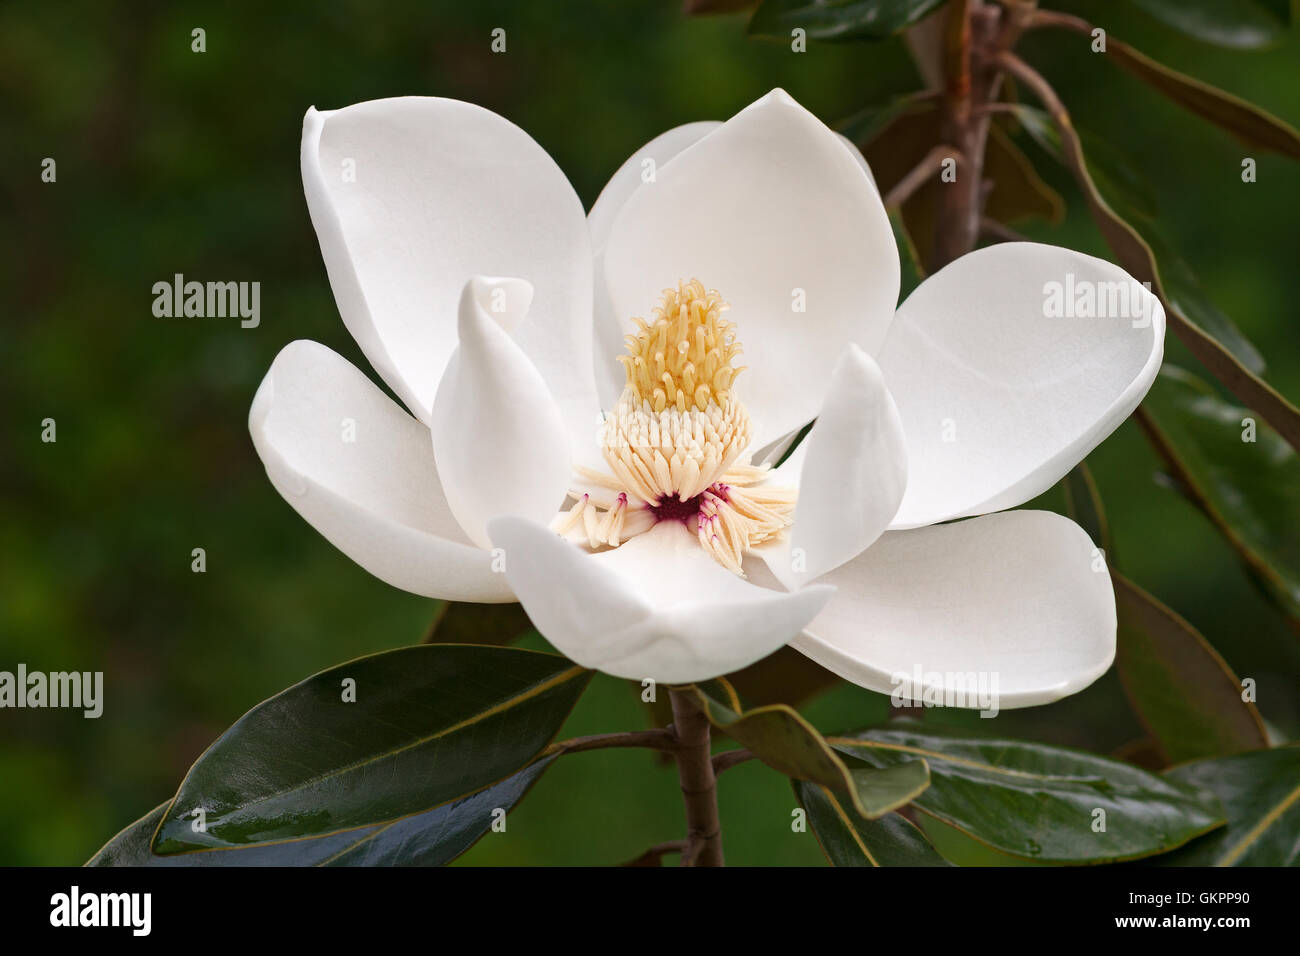 Southern magnolia flower Stock Photo